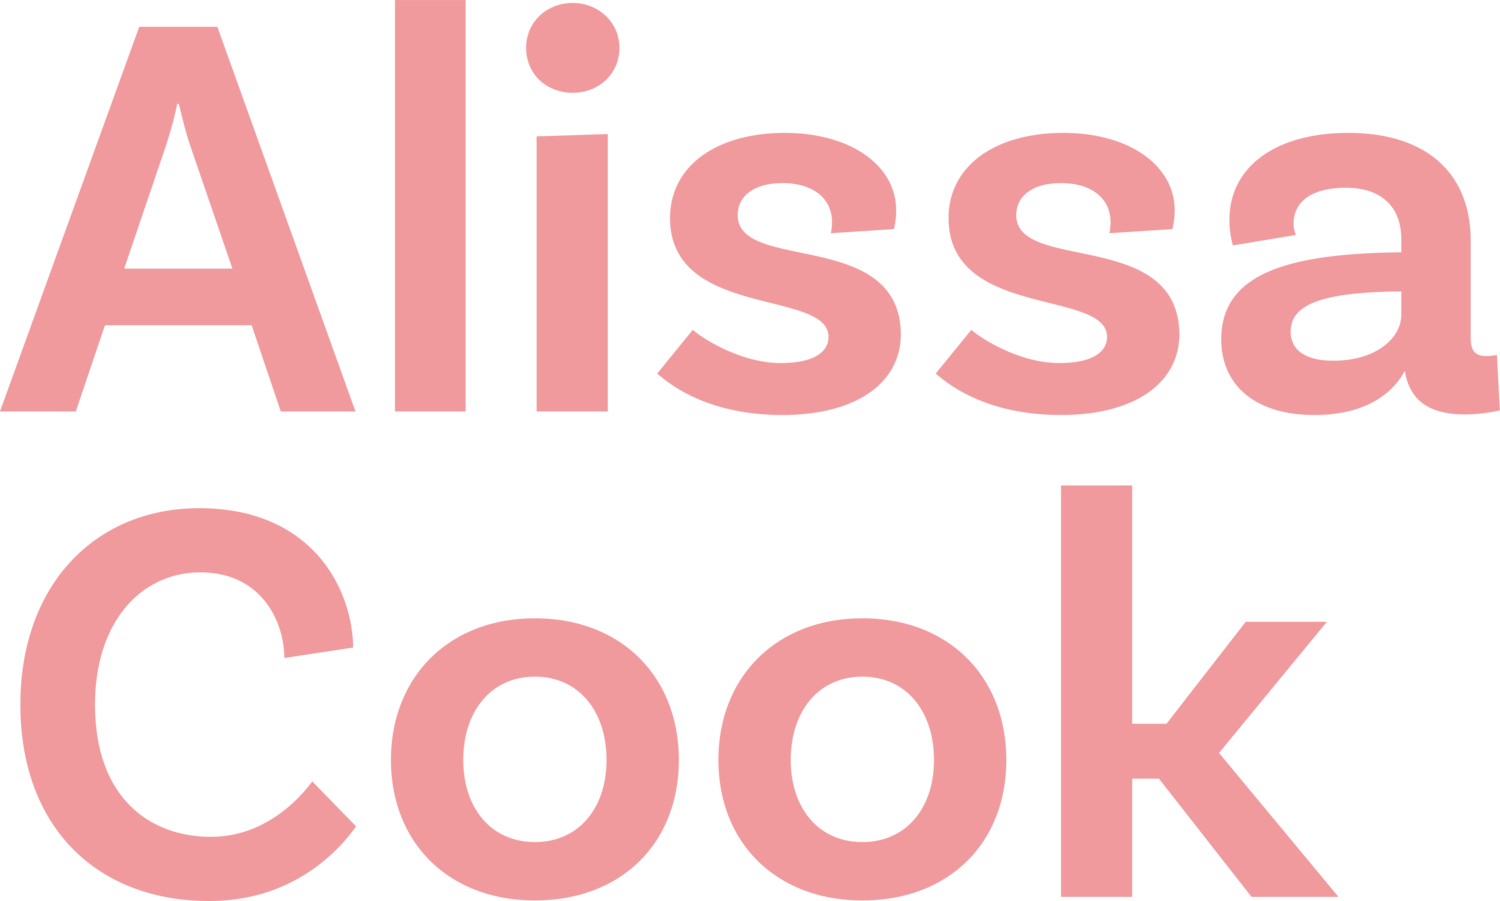 Alissa Cook